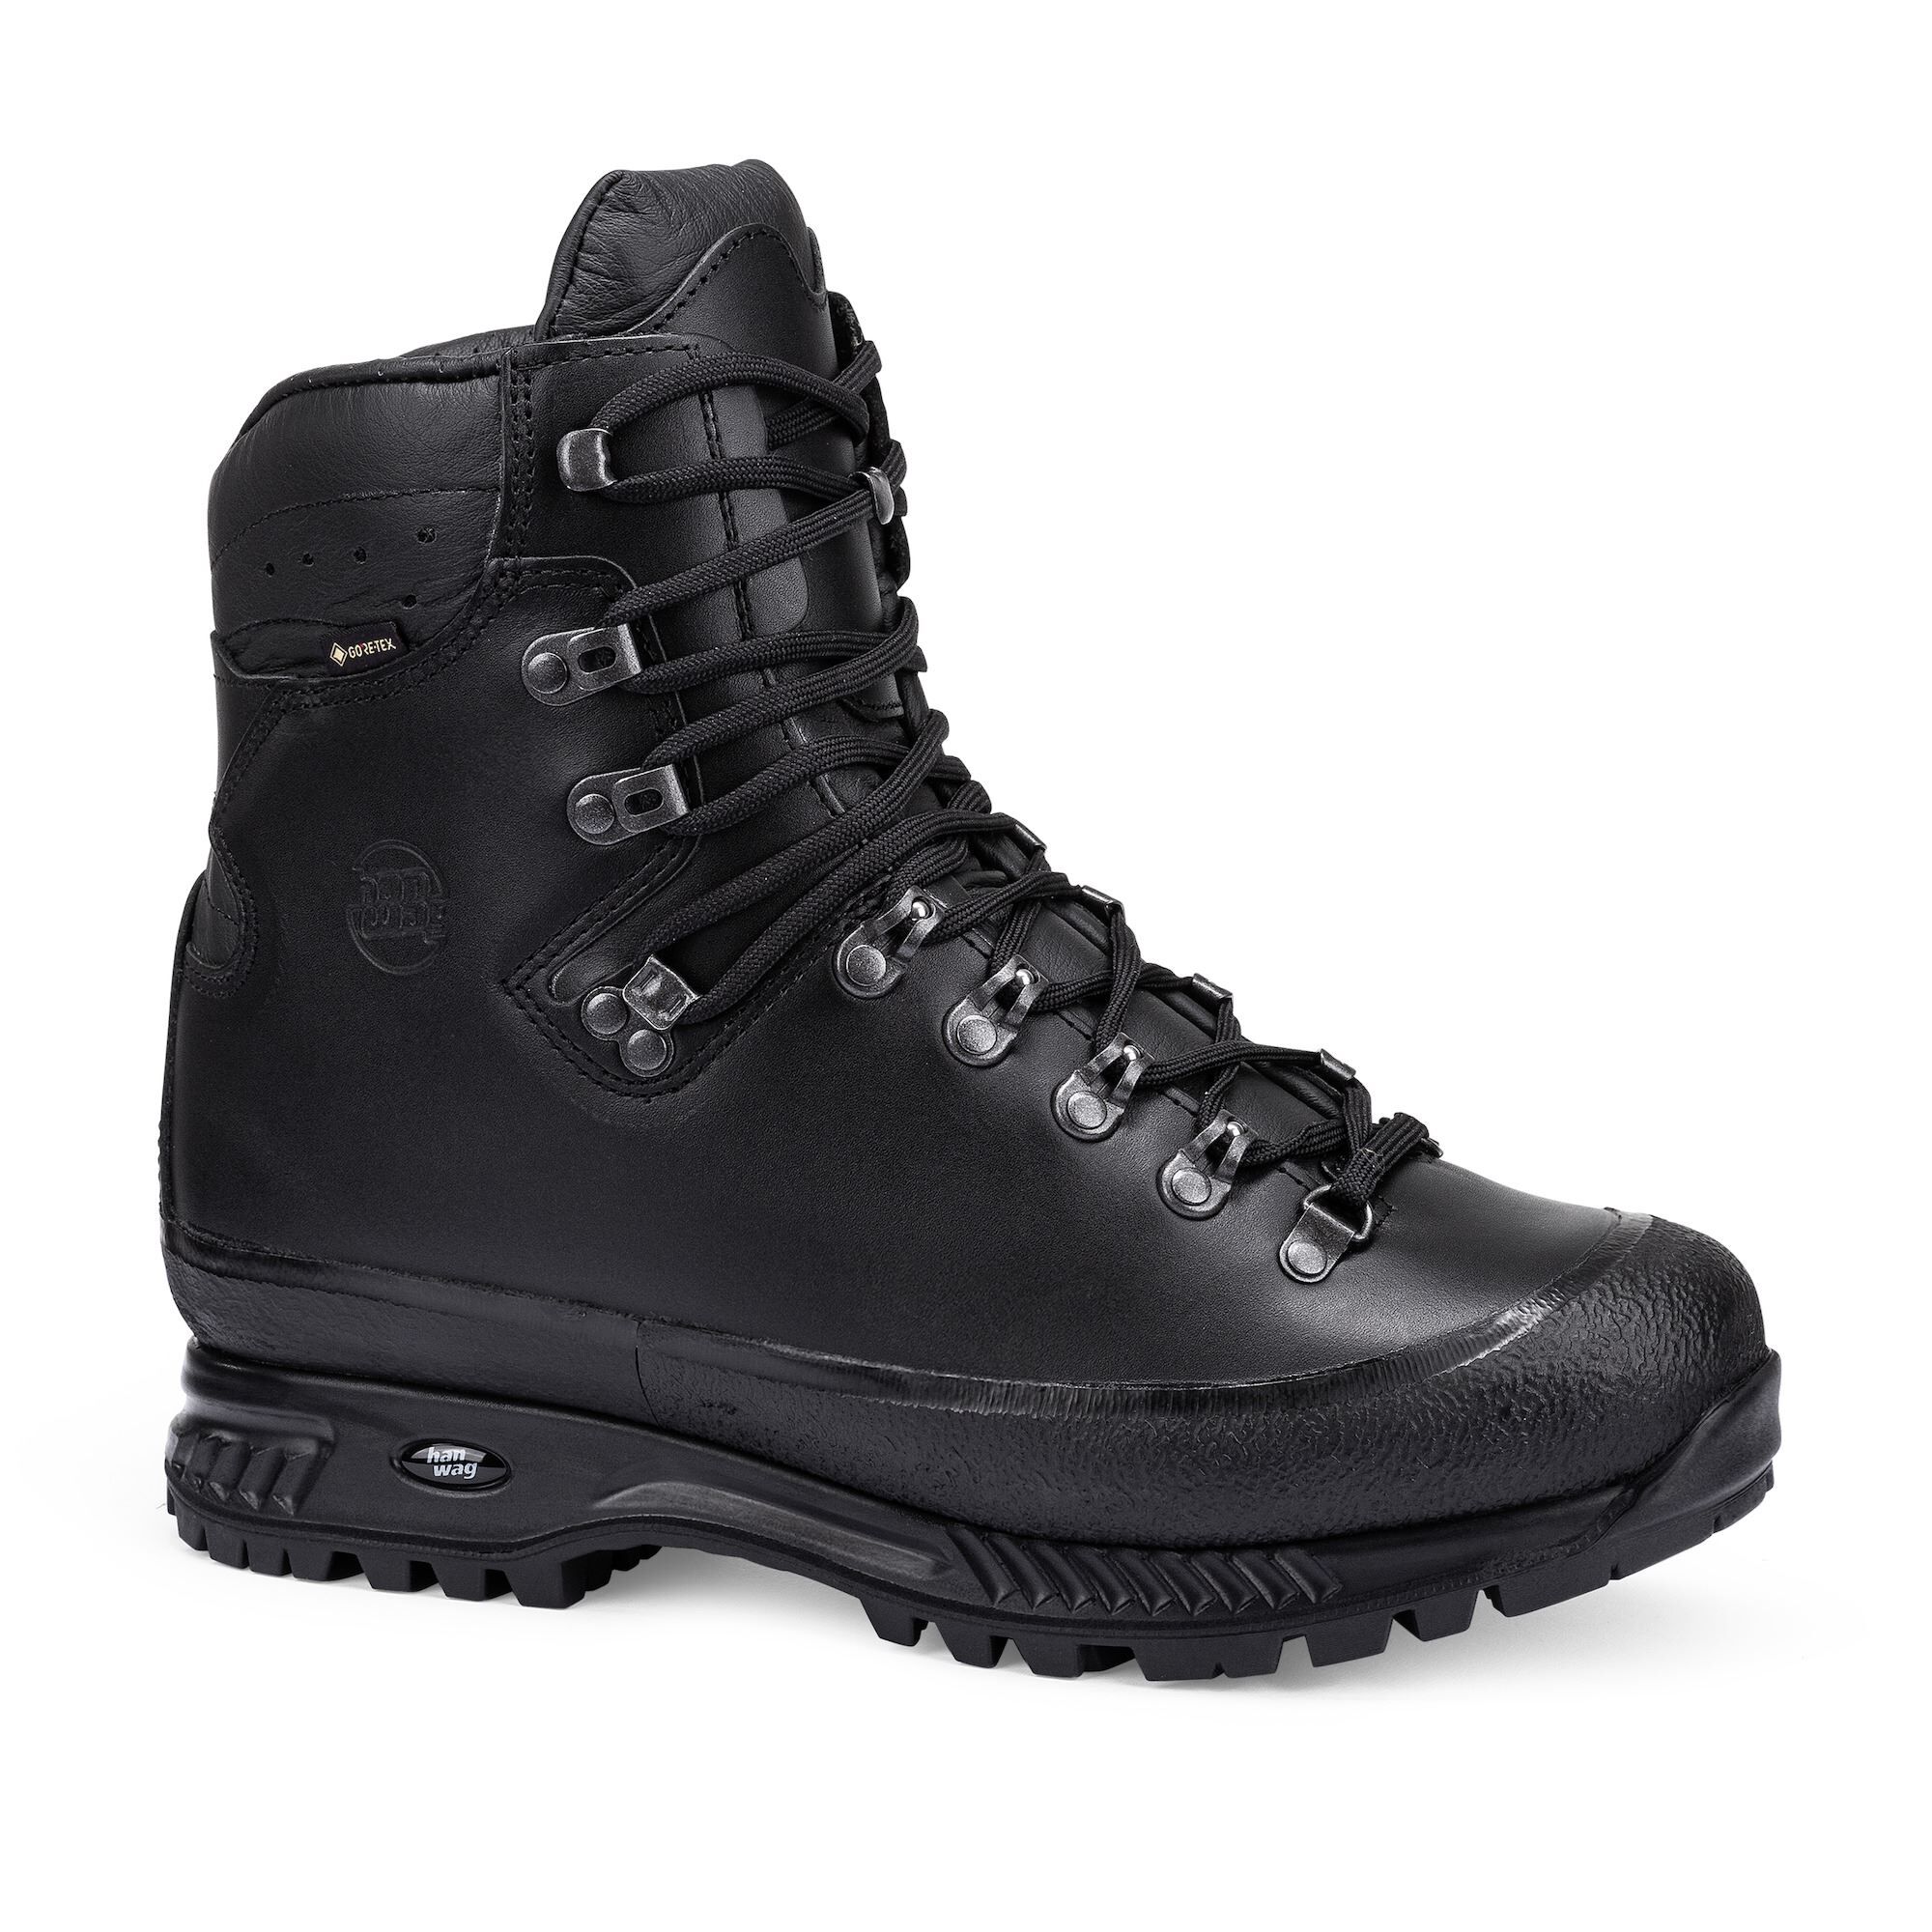 Hanwag Alaska Wide GTX - Hiking boots - Men's